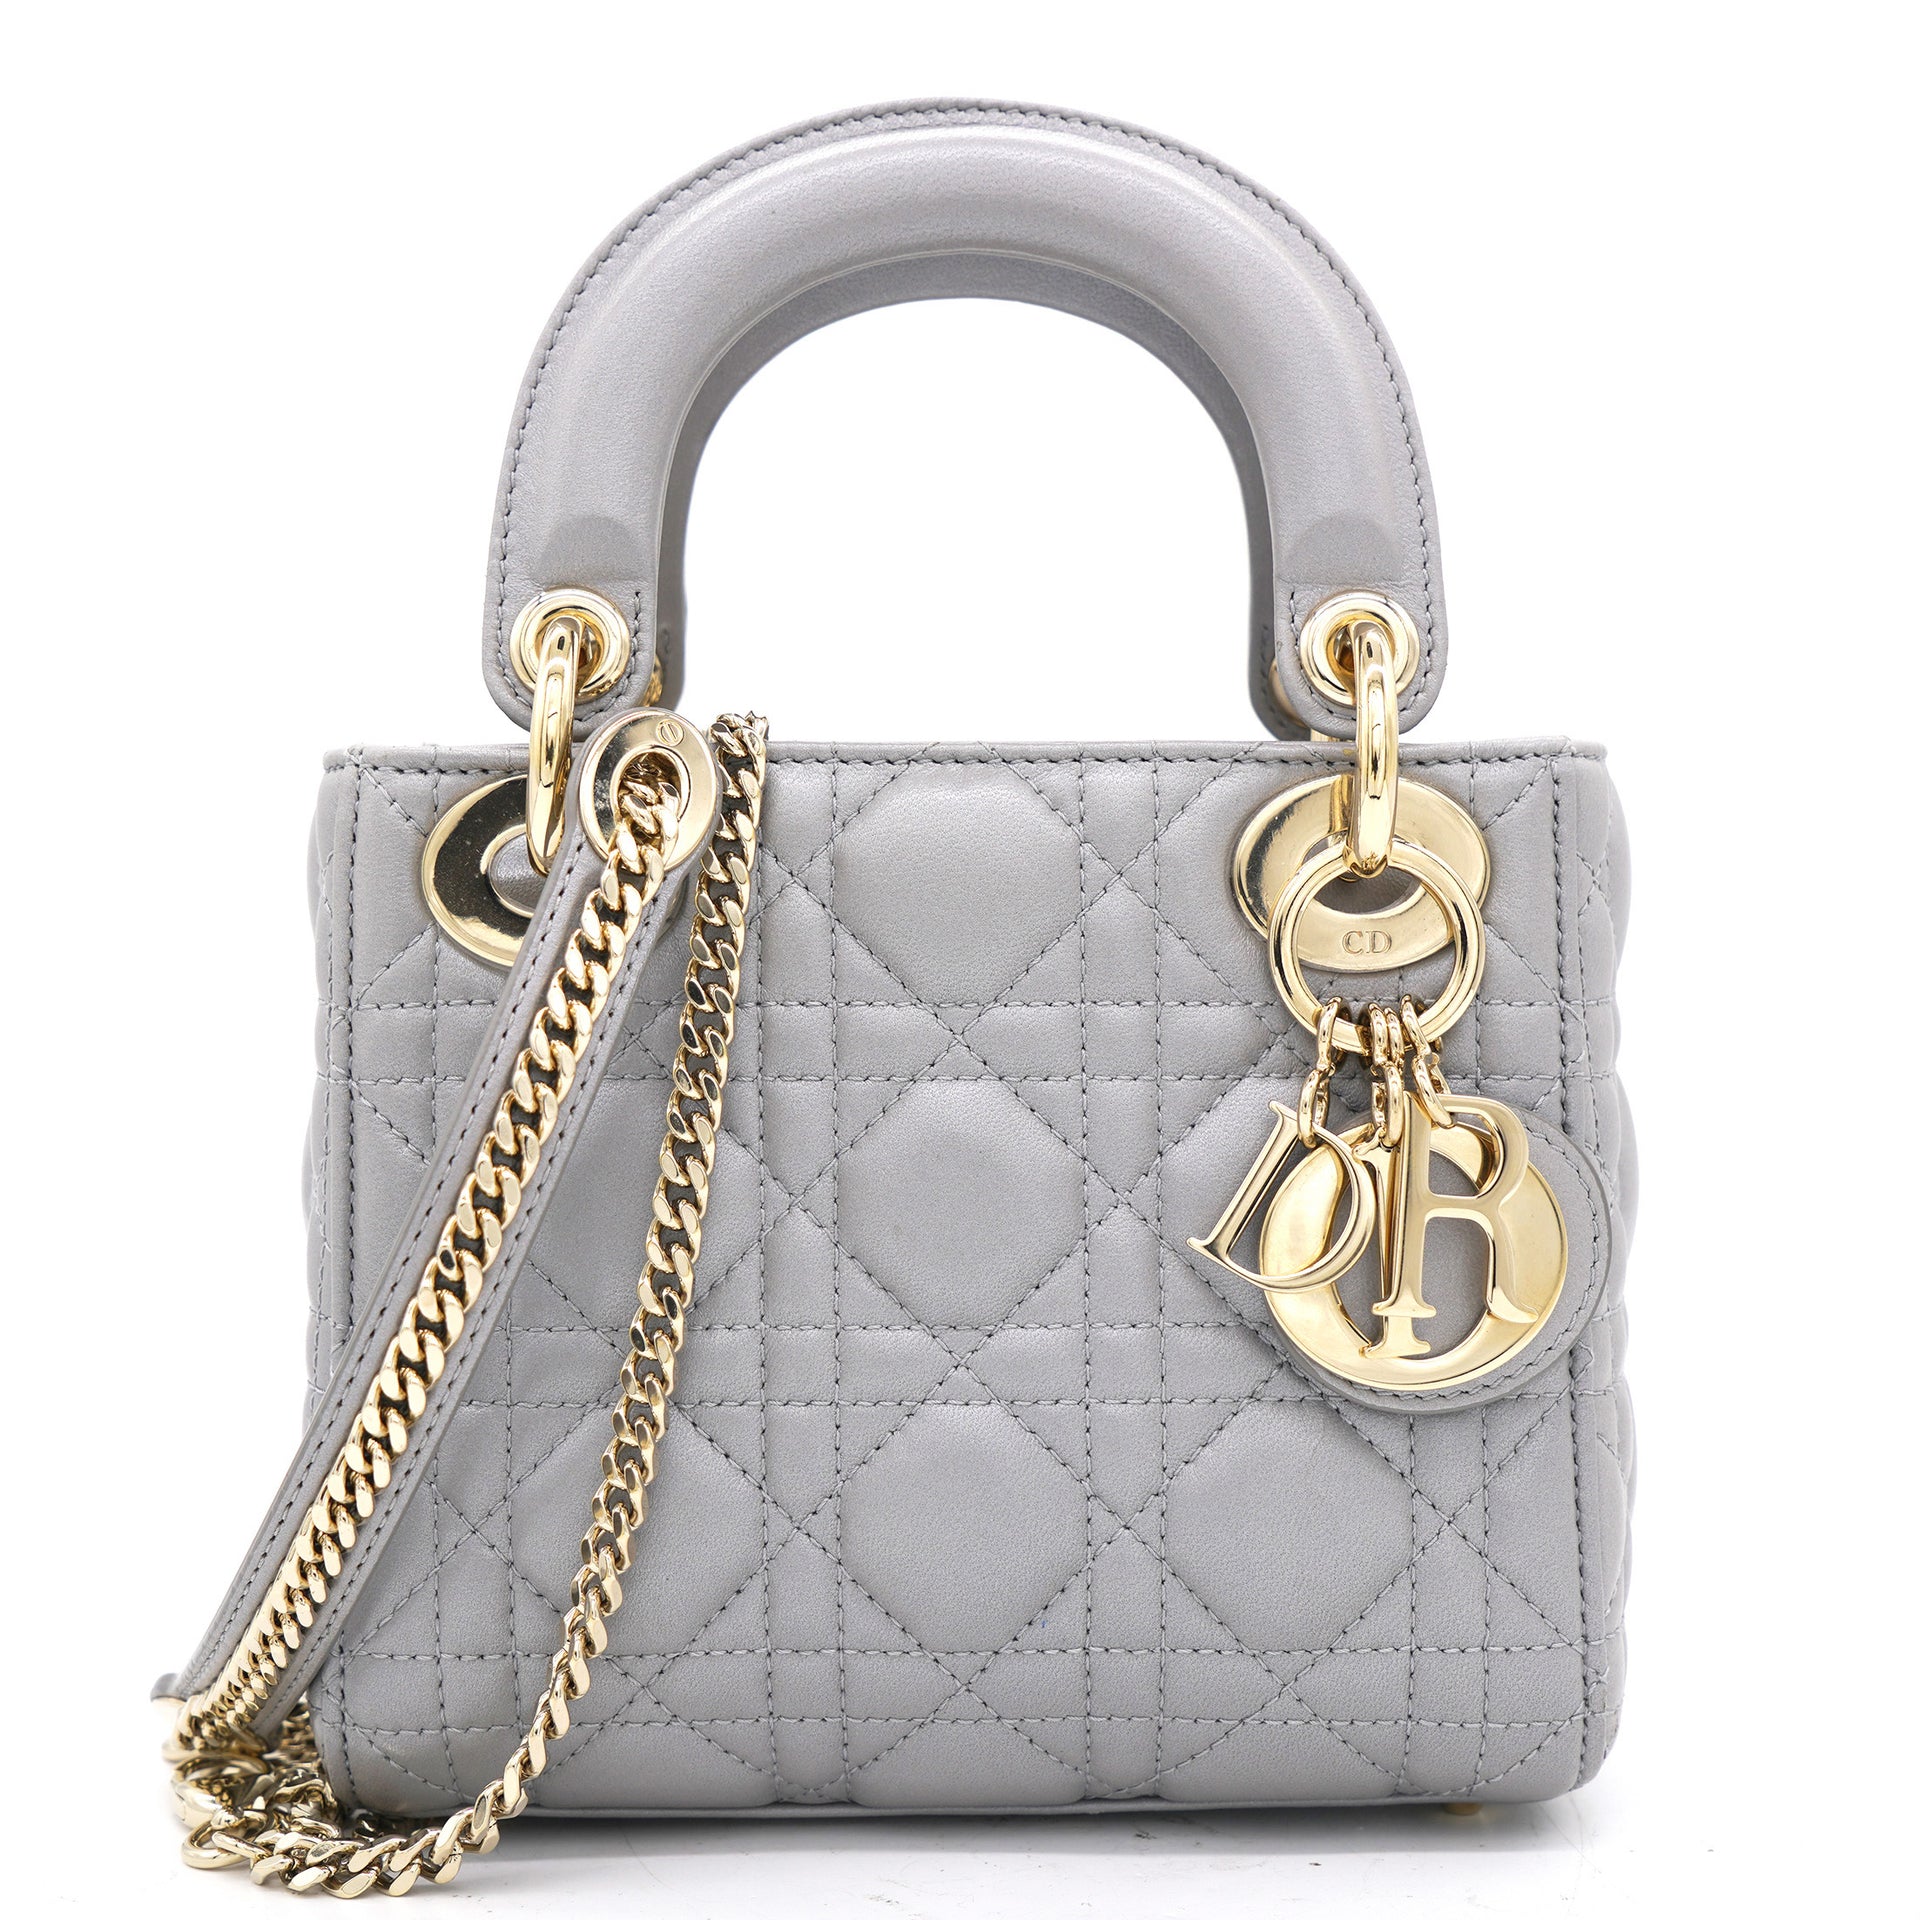 Christian Dior Lady Dior Bag Pearl Grey - Very Rare